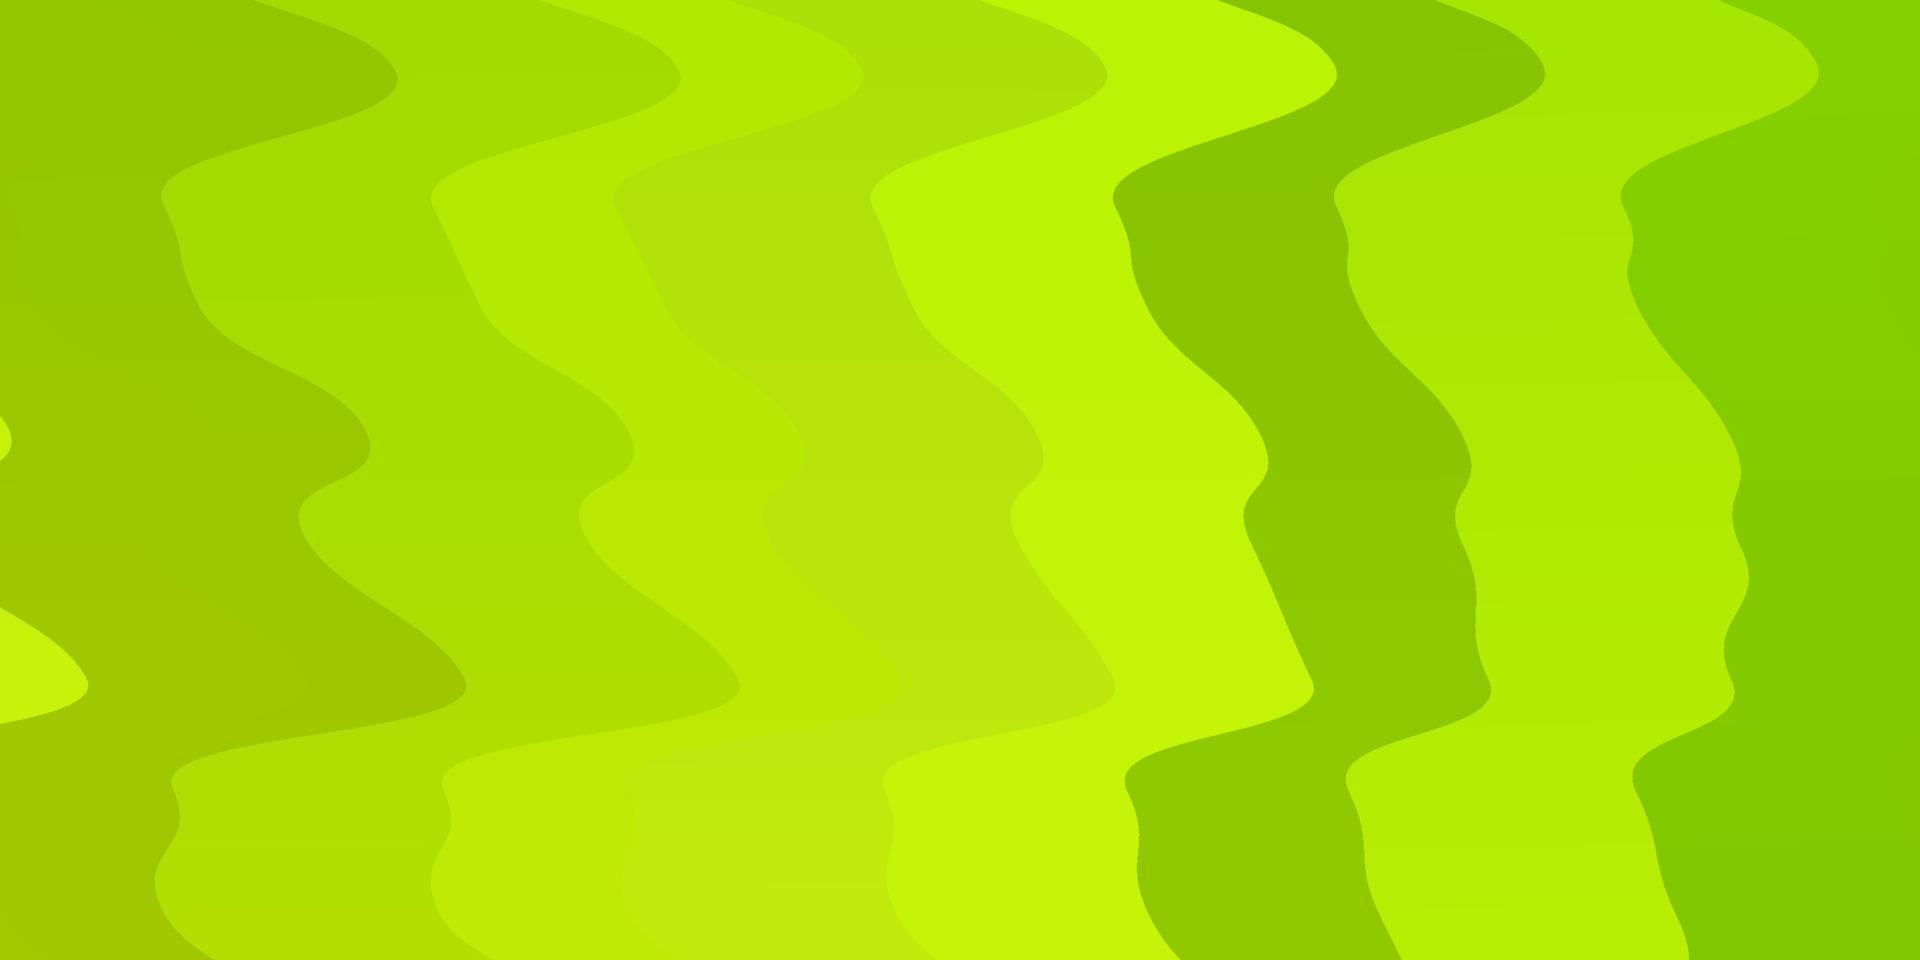 diseño de vector verde claro, amarillo con arco circular.